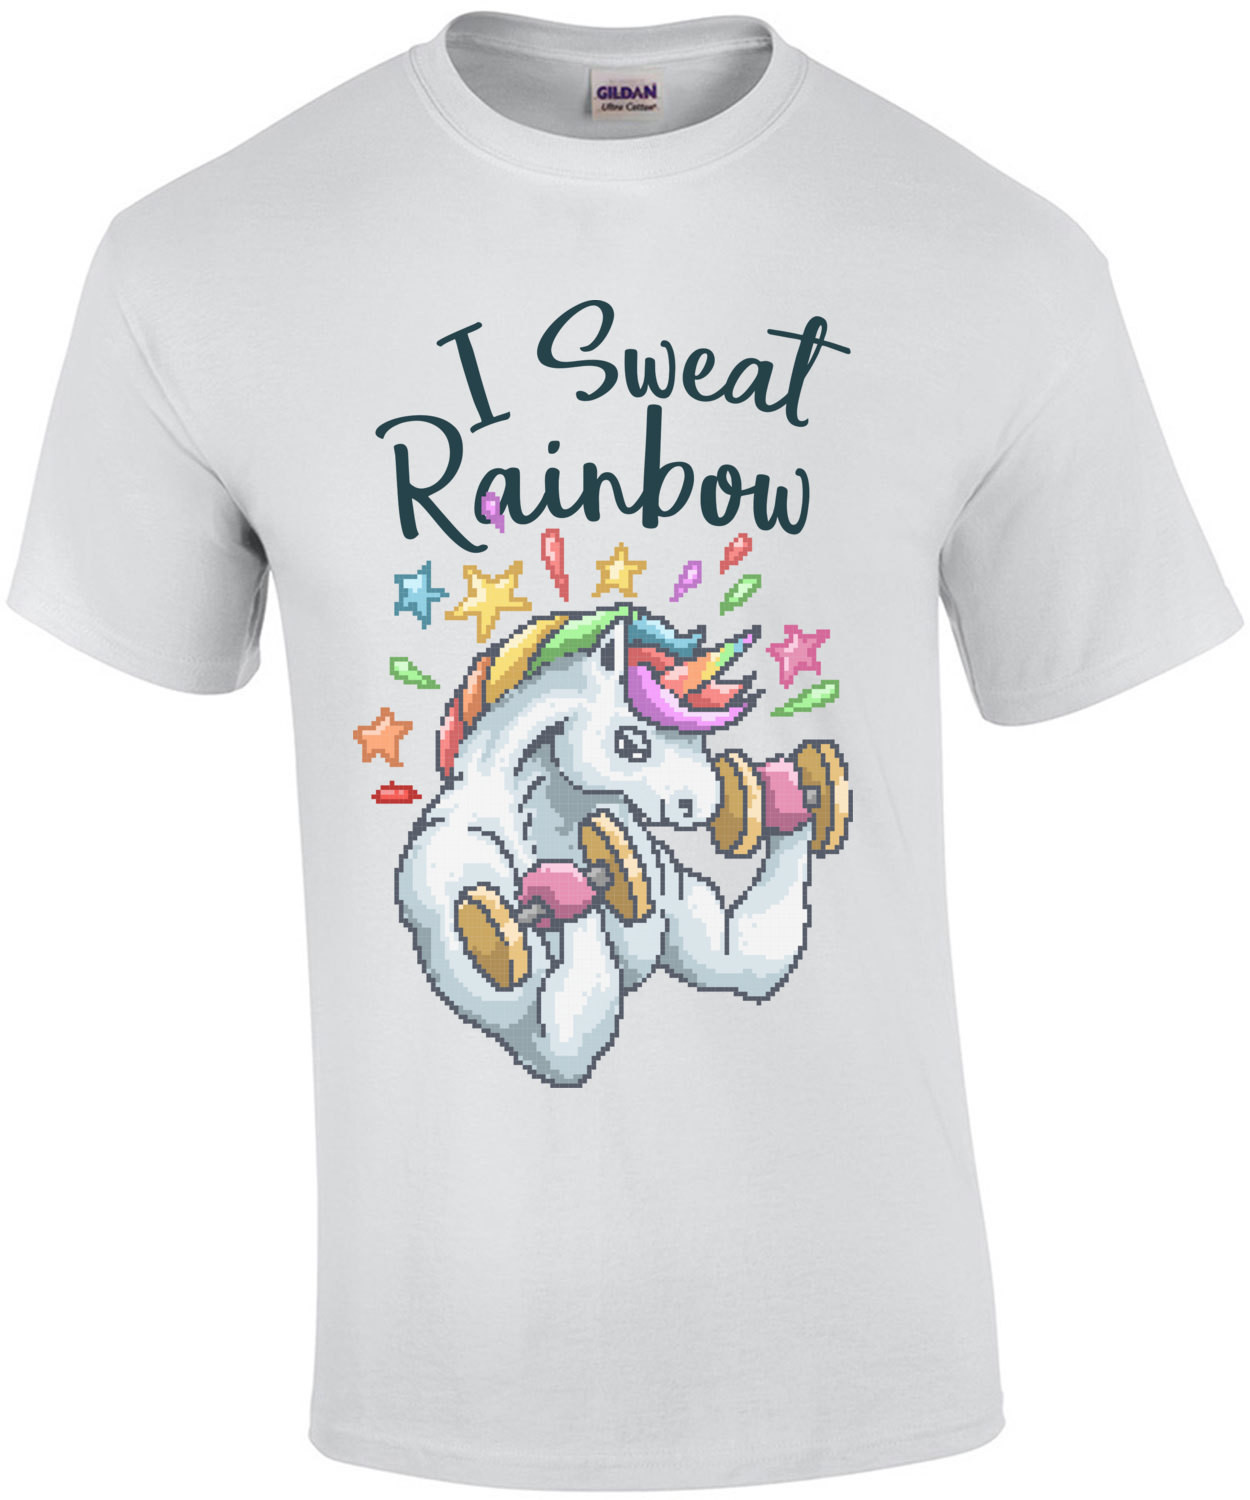 I Sweat Rainbow Unicorn T-Shirt